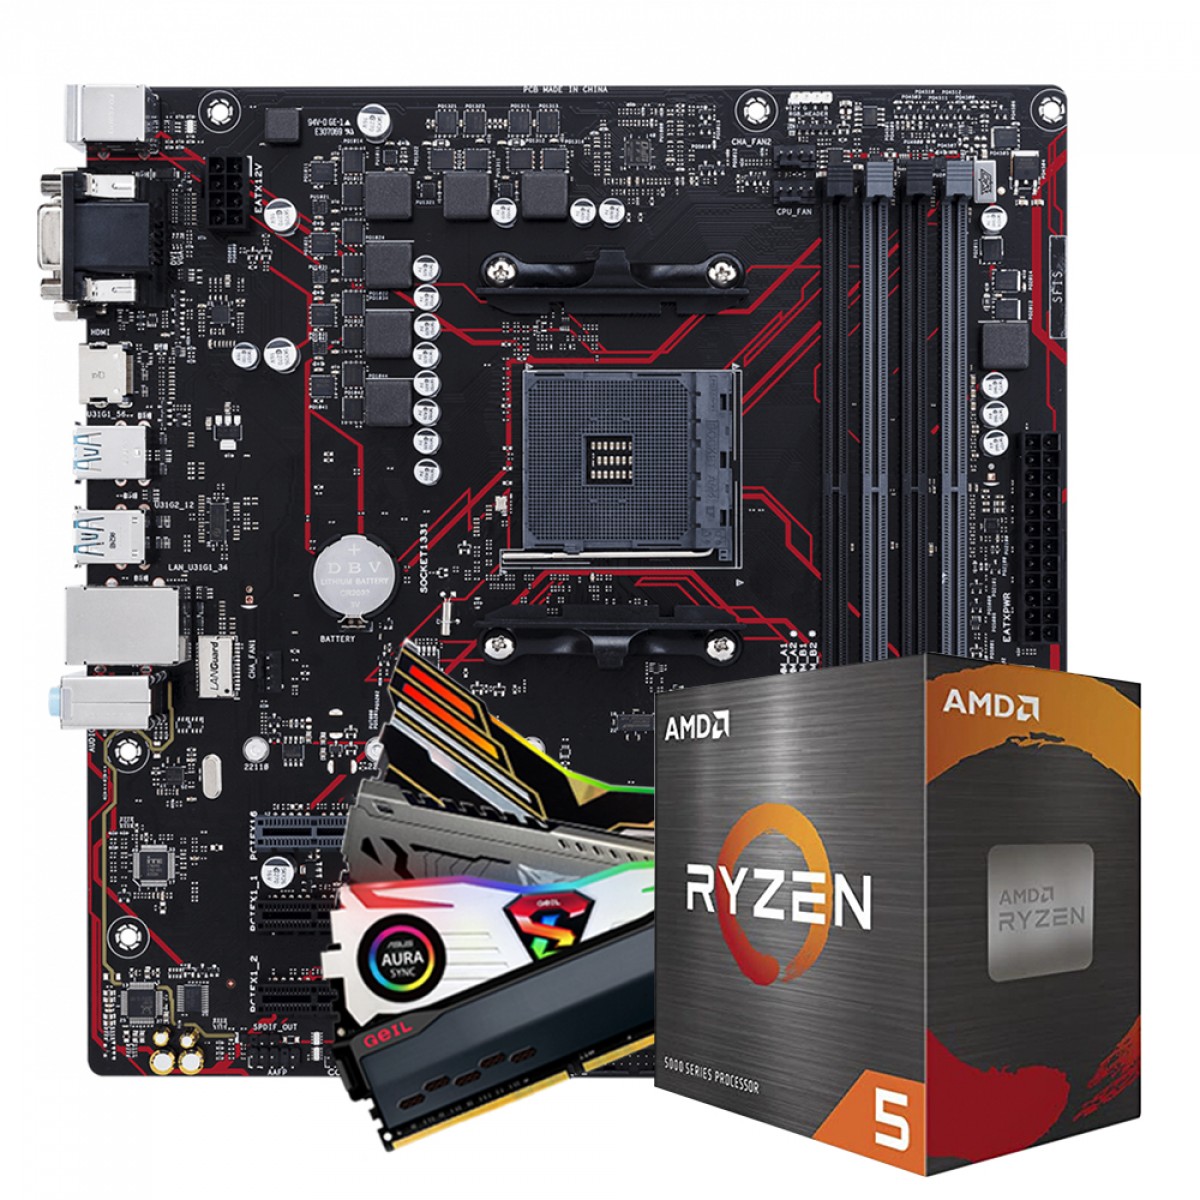 Kit Upgrade, AMD Ryzen 5 3600, + Placa Mãe Chipset B450, + Memória 8GB DDR4